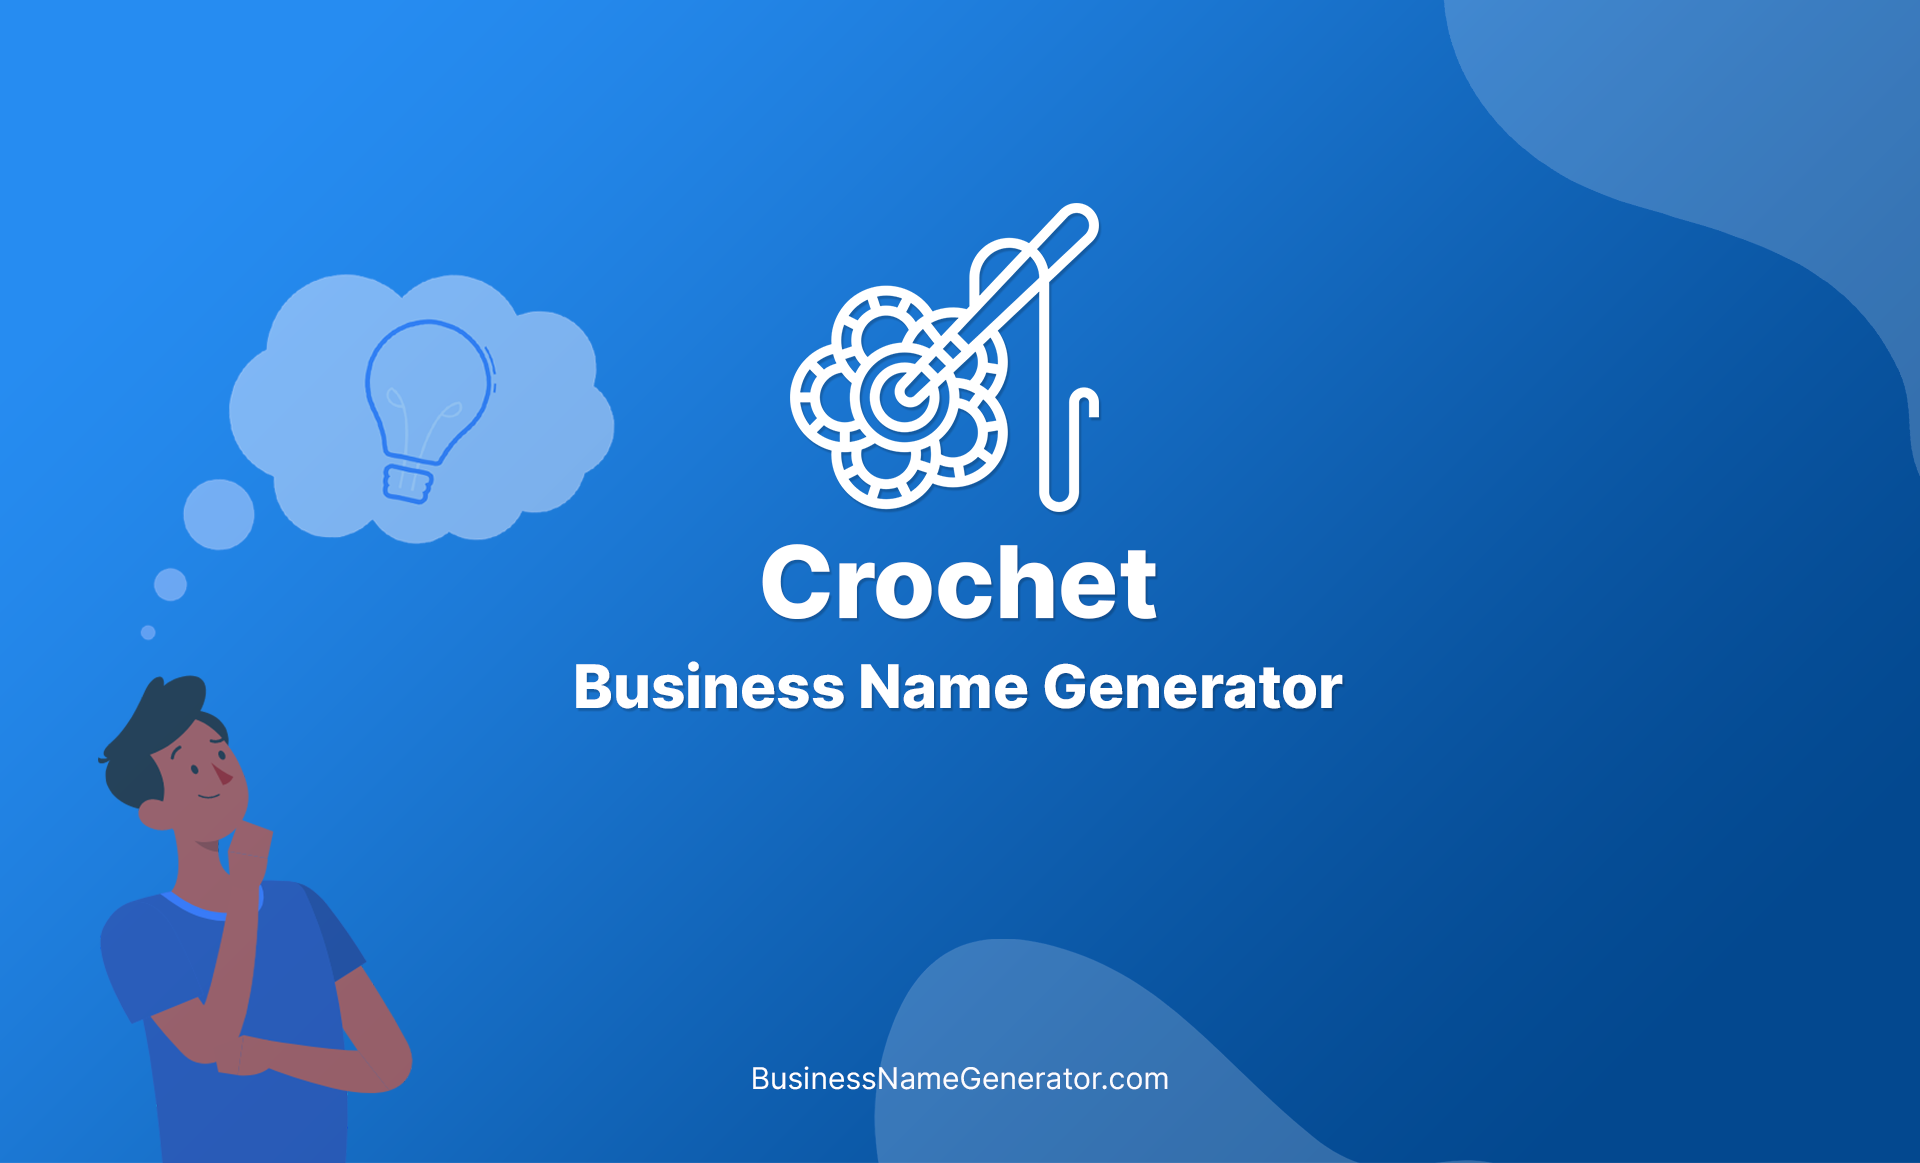 Crochet Business Name Generator